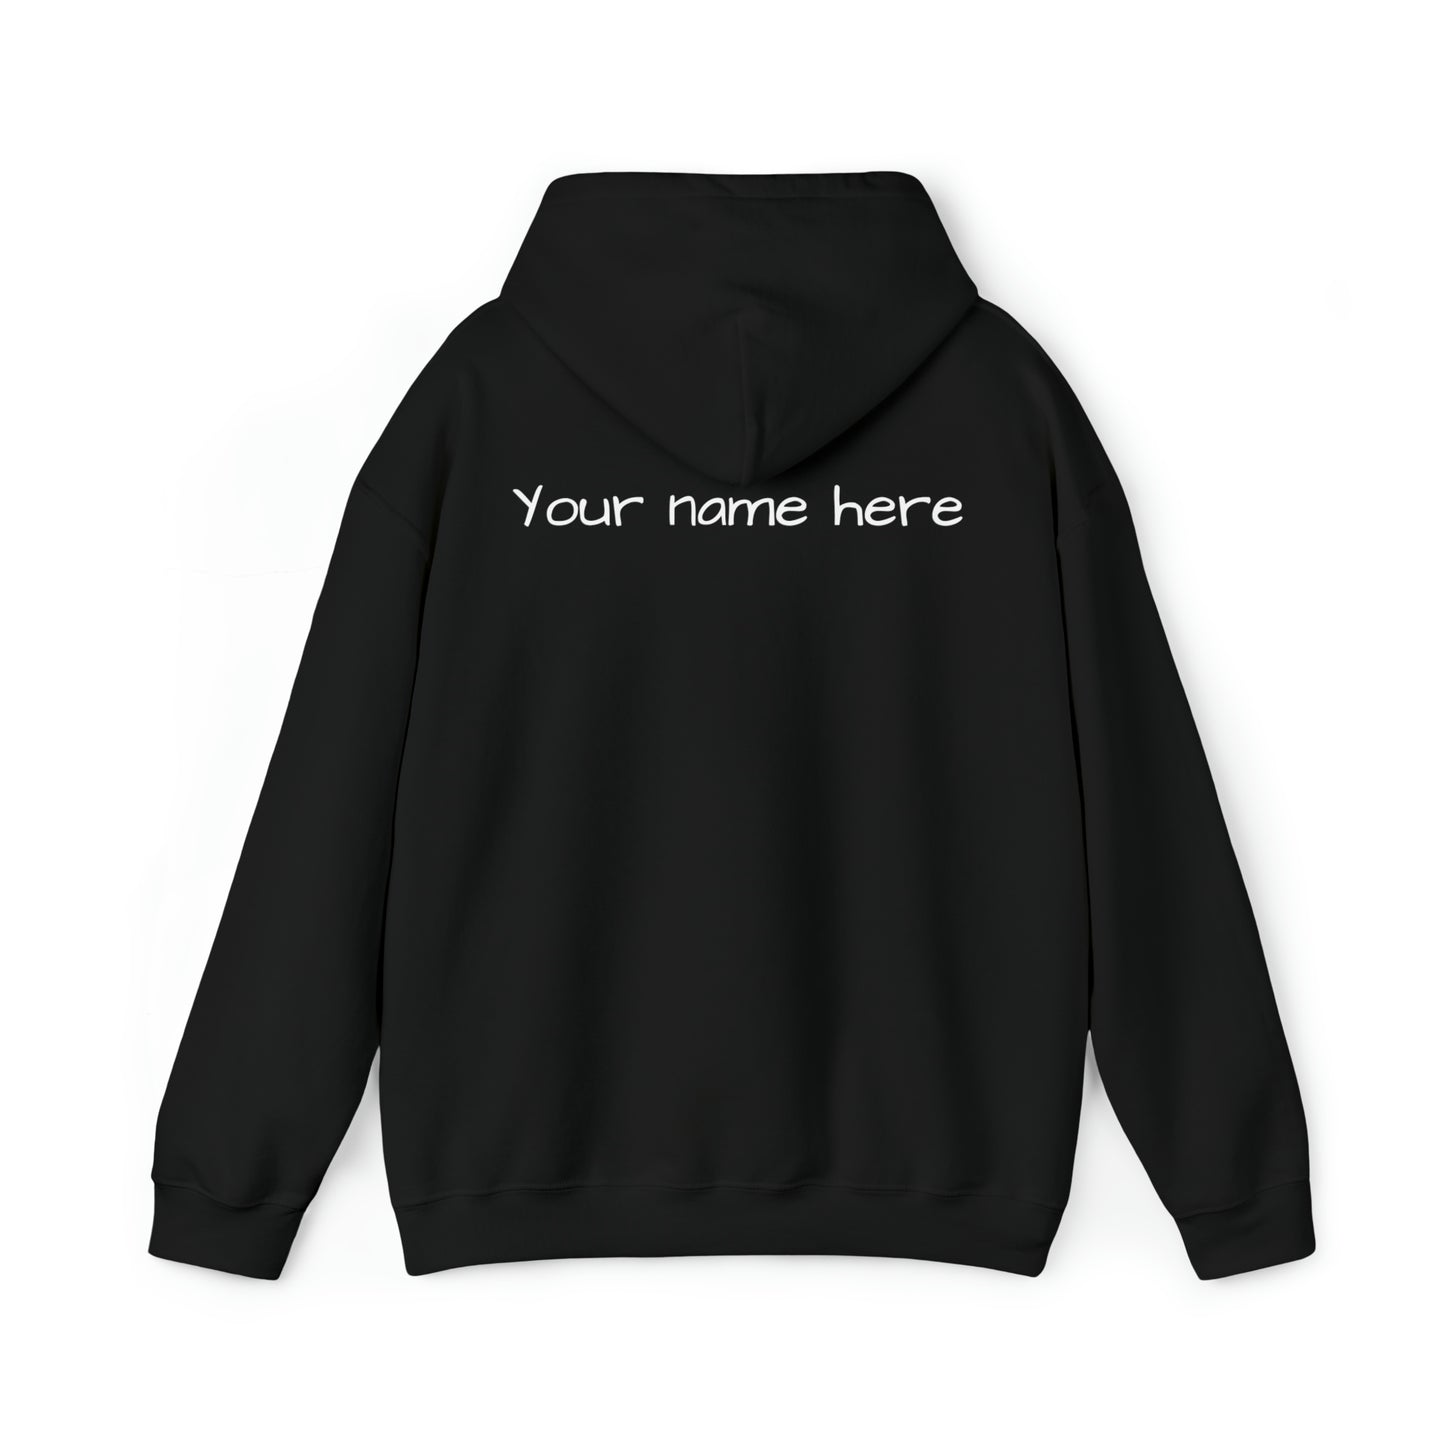 WOA Personalized Adult Unisex Heavy Blend™ Hooded Sweatshirt | FREE SHIPPING!